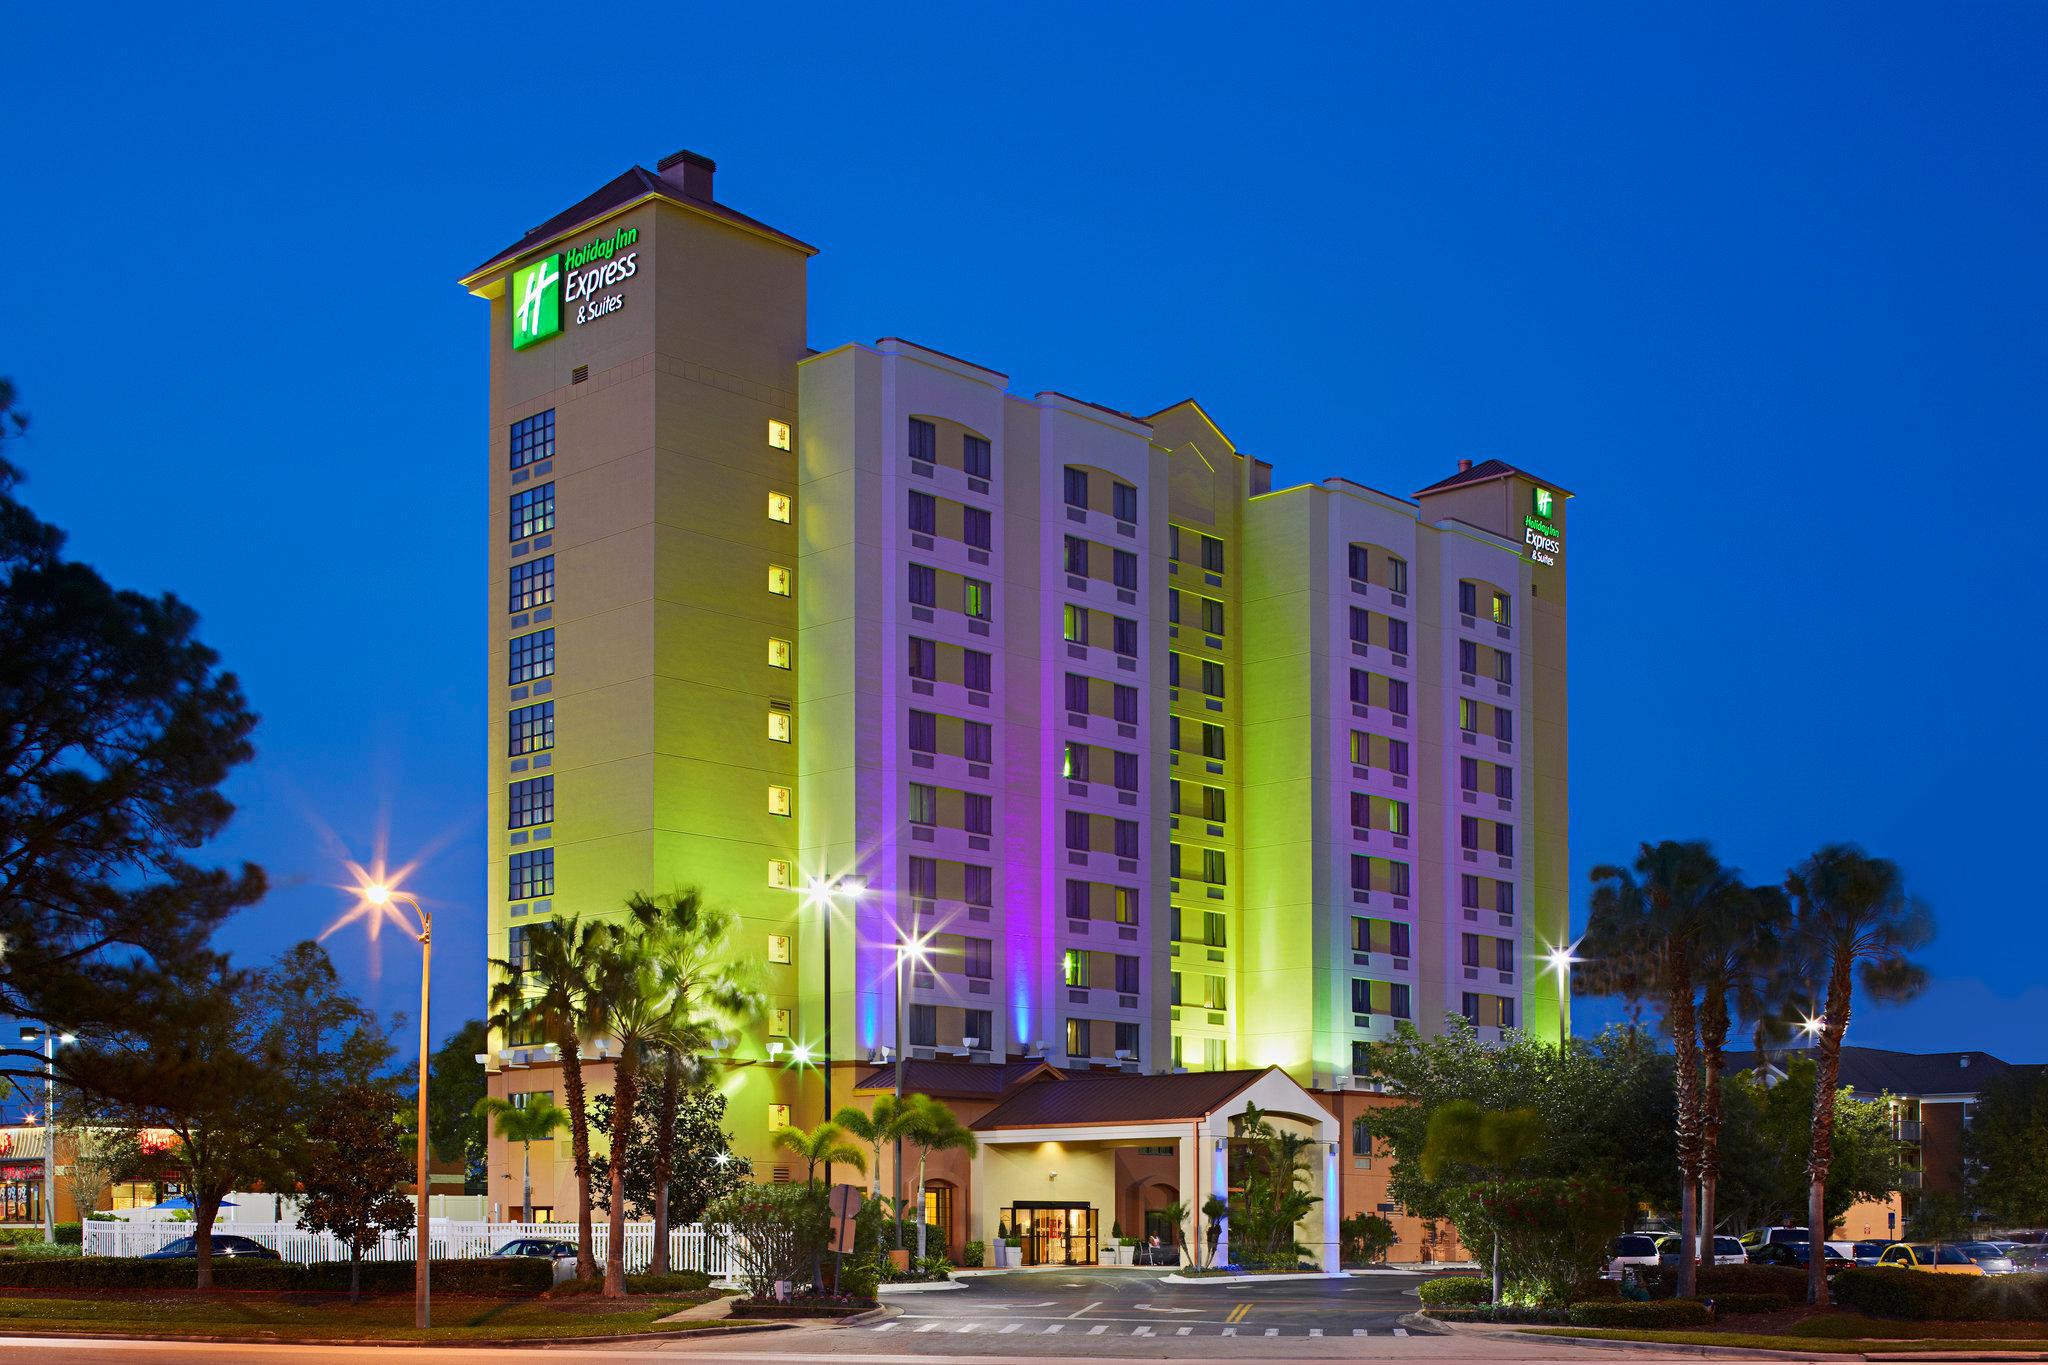 Photo of Holiday Inn Express & Suites Nearest Universal Orlando, Orlando, FL